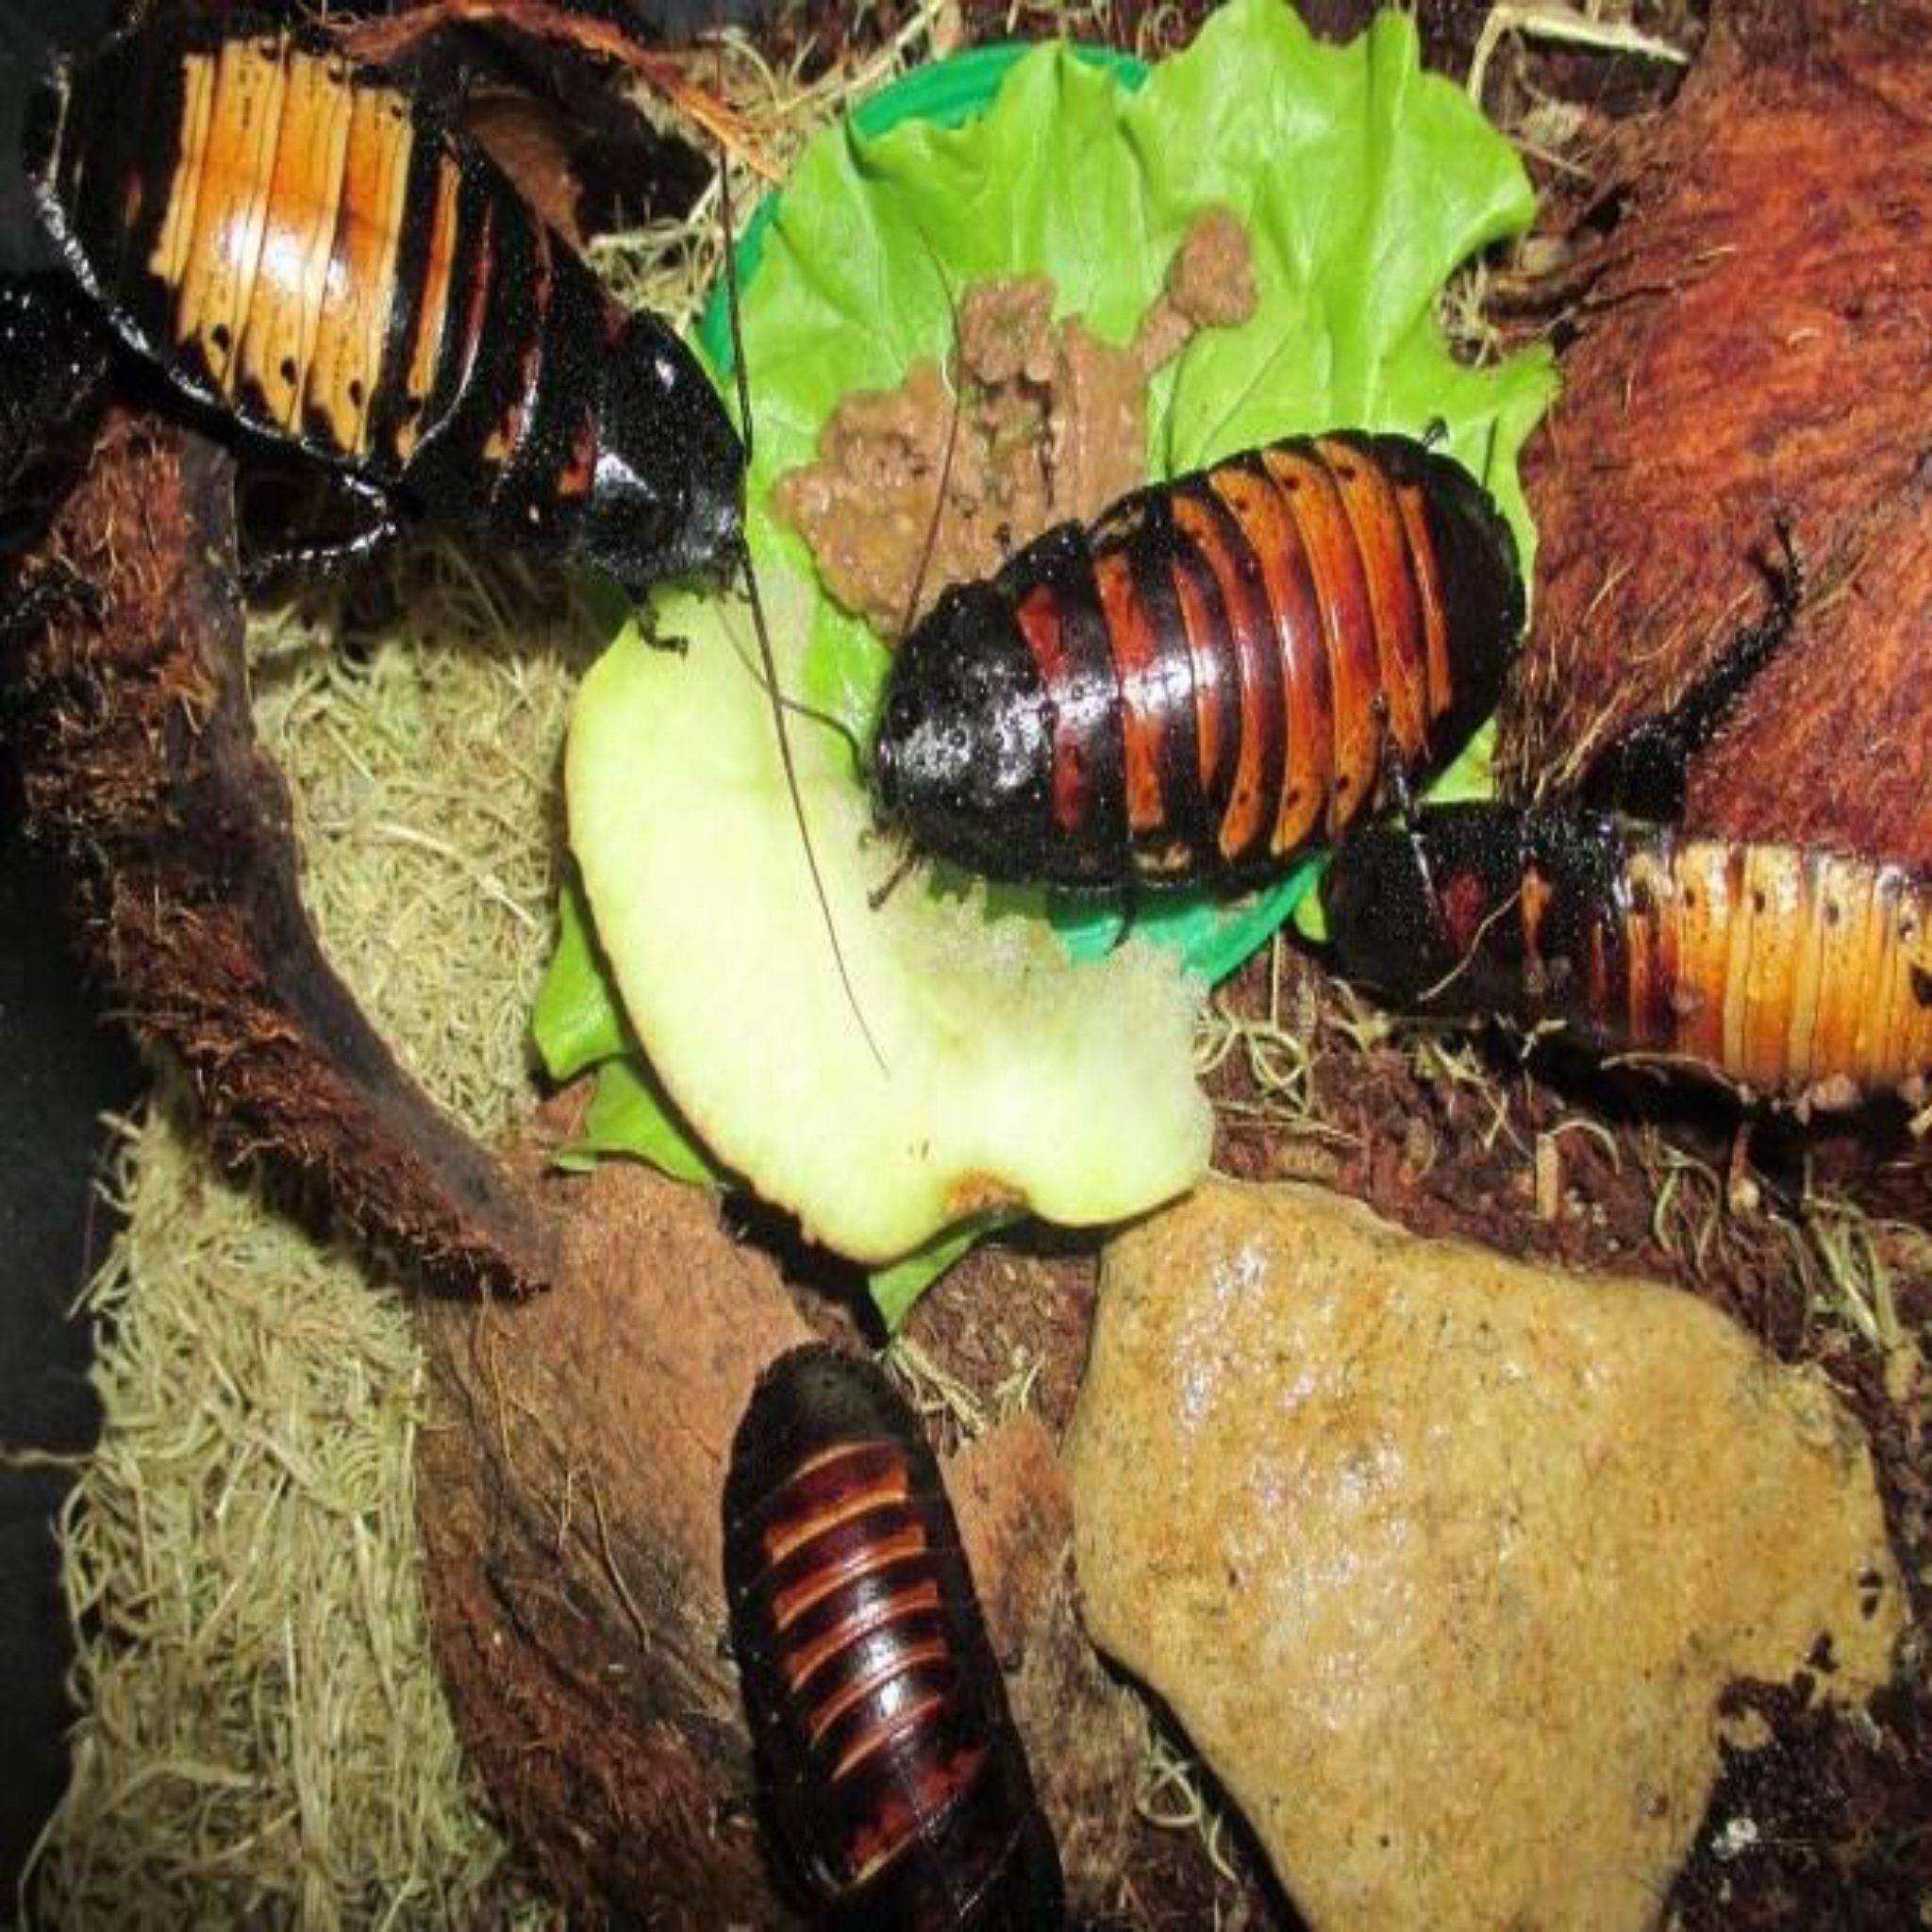 Тараканы - как готовить мадагаскарских тараканов